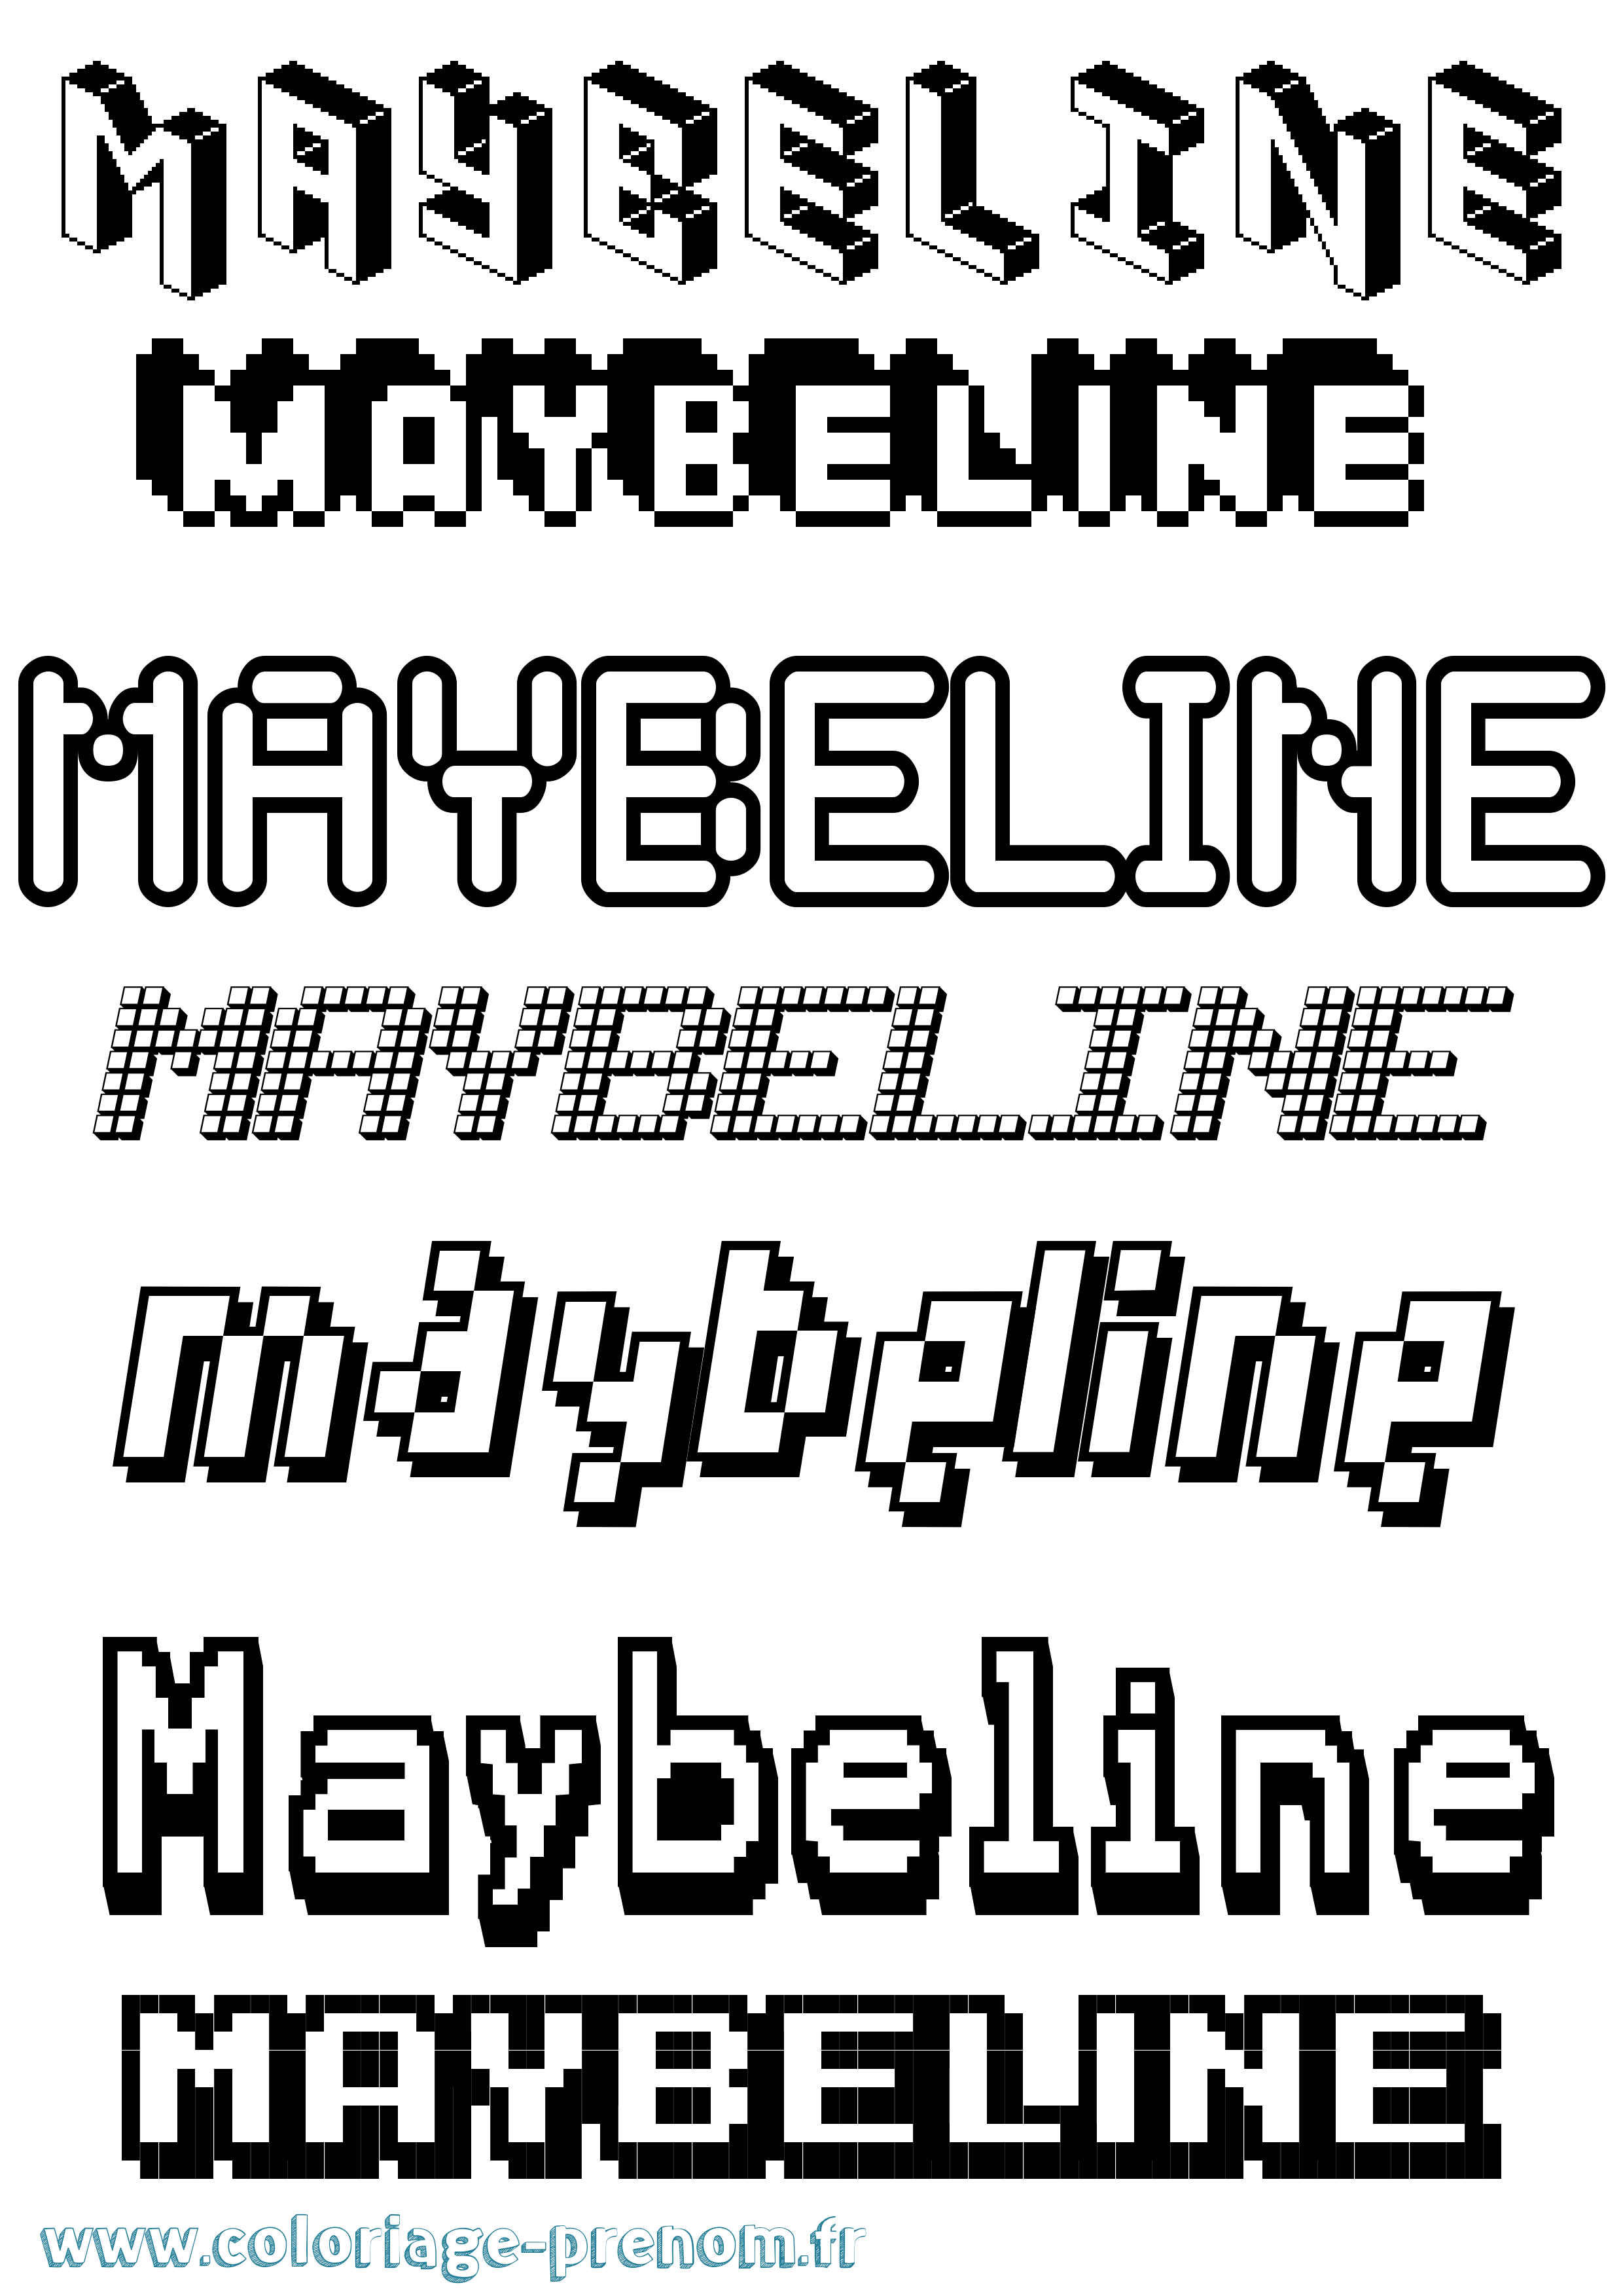 Coloriage prénom Maybeline Pixel